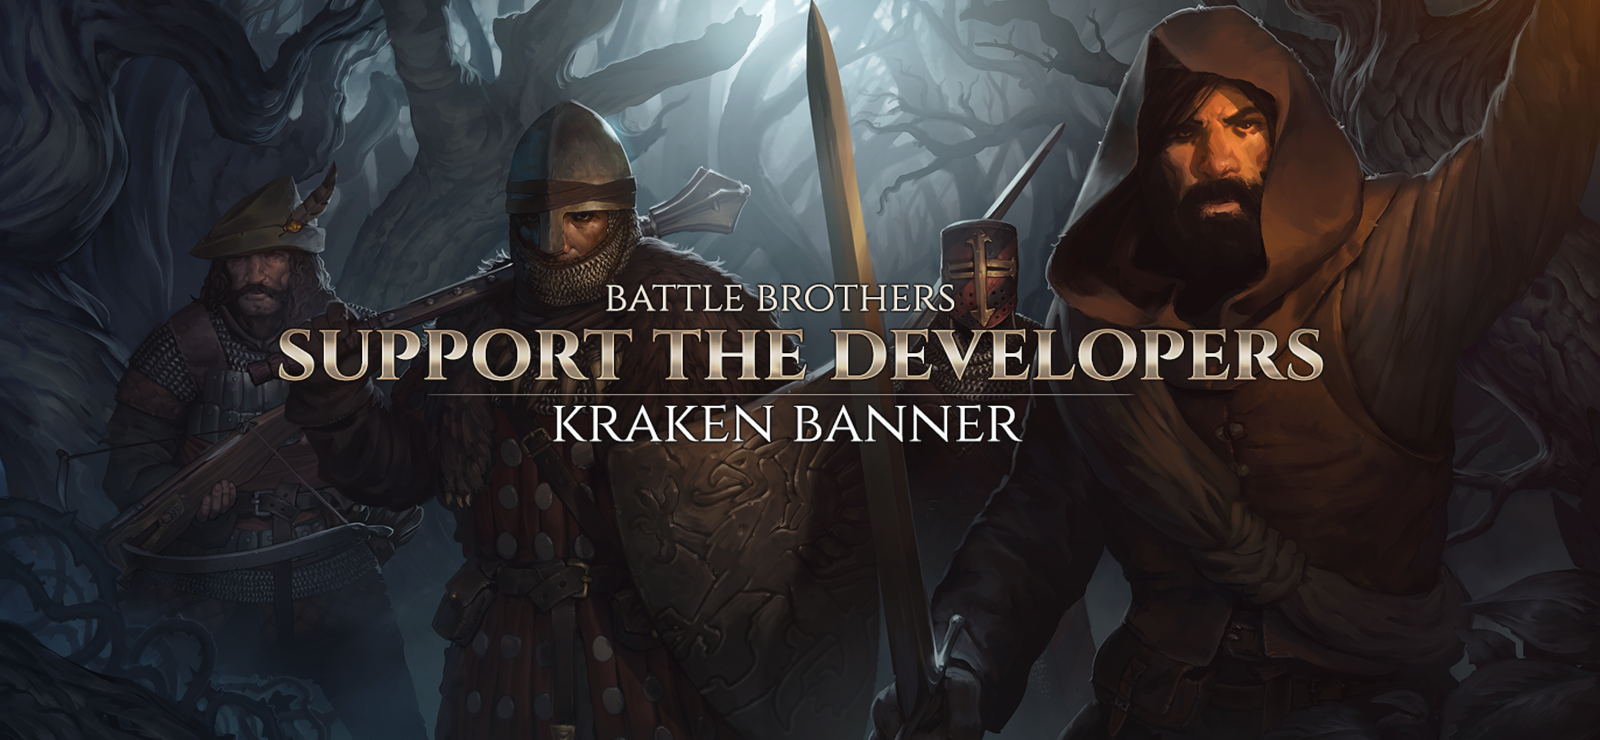 Battle Brothers - Support The Developers & Kraken Banner